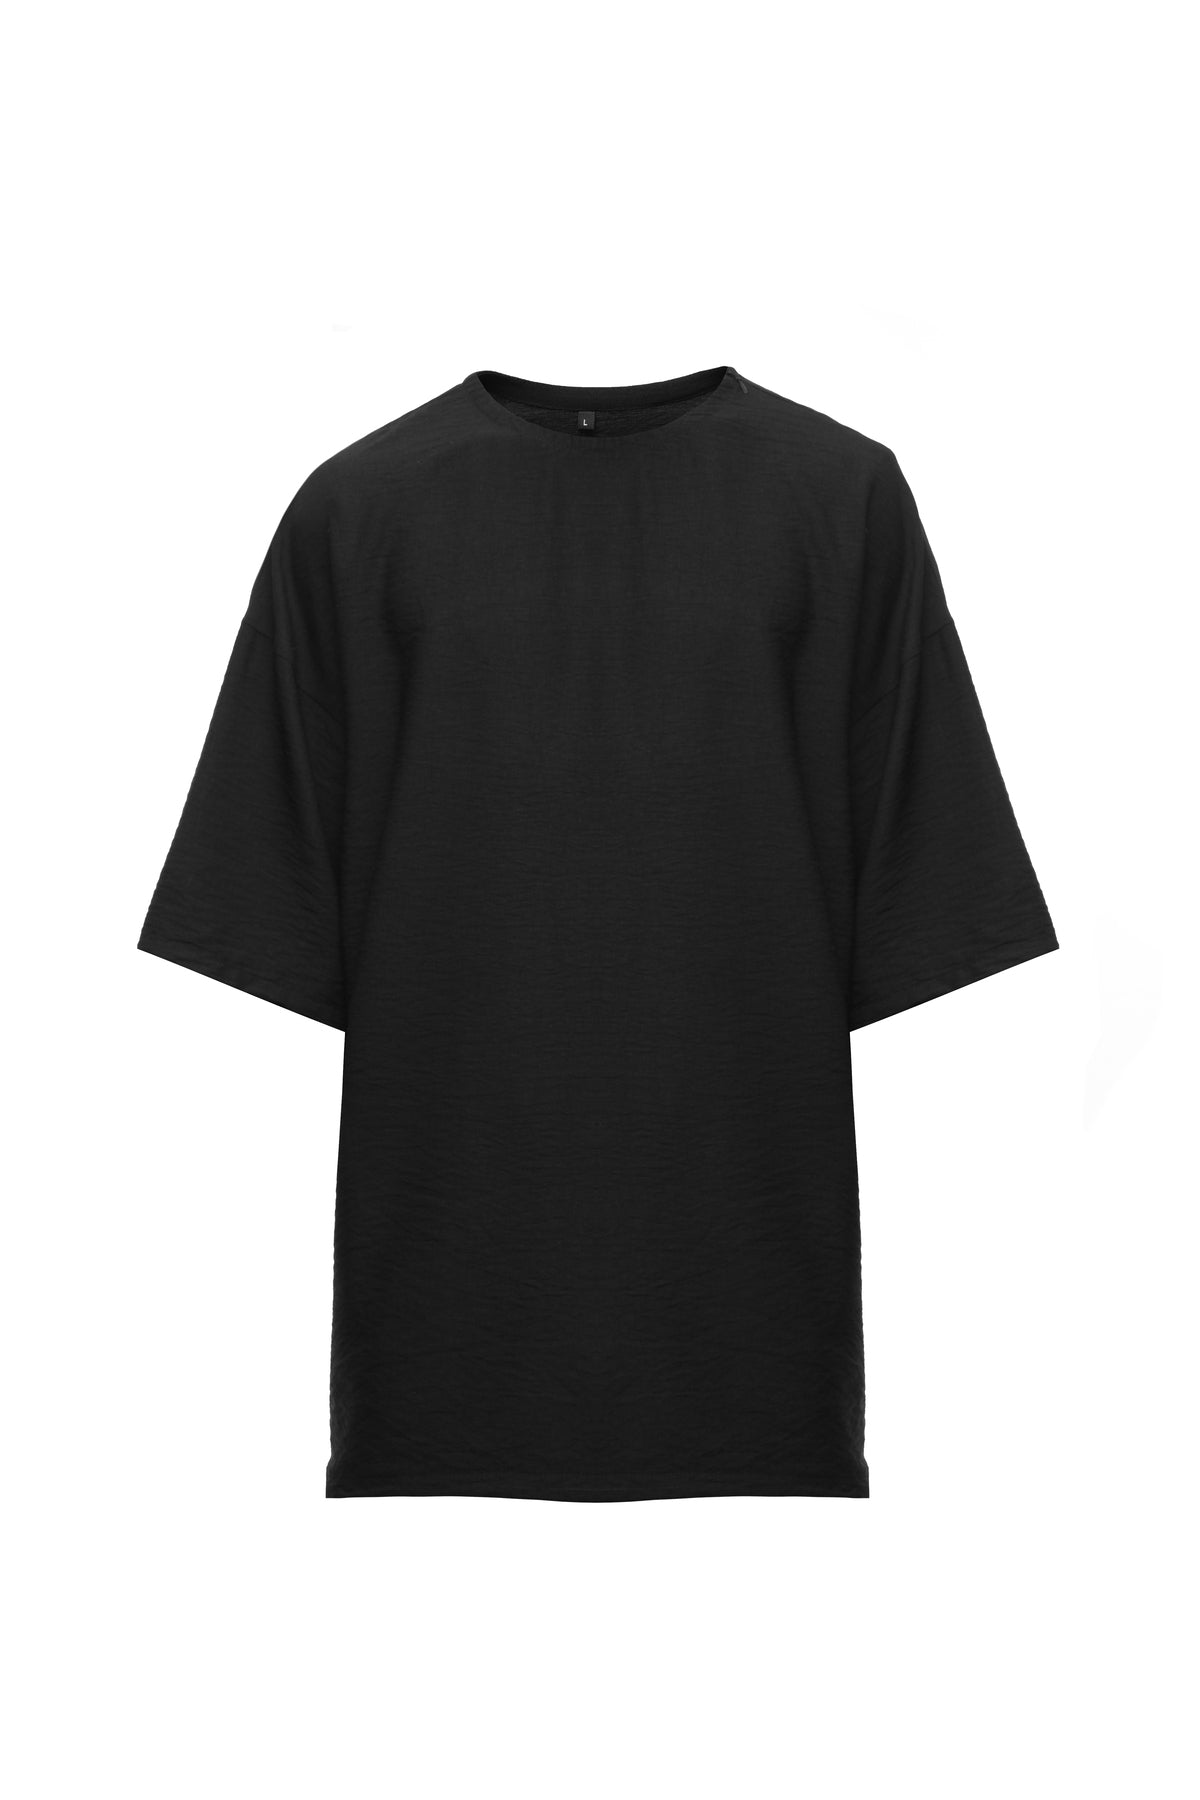 Black Zip Boxy T-Shirt